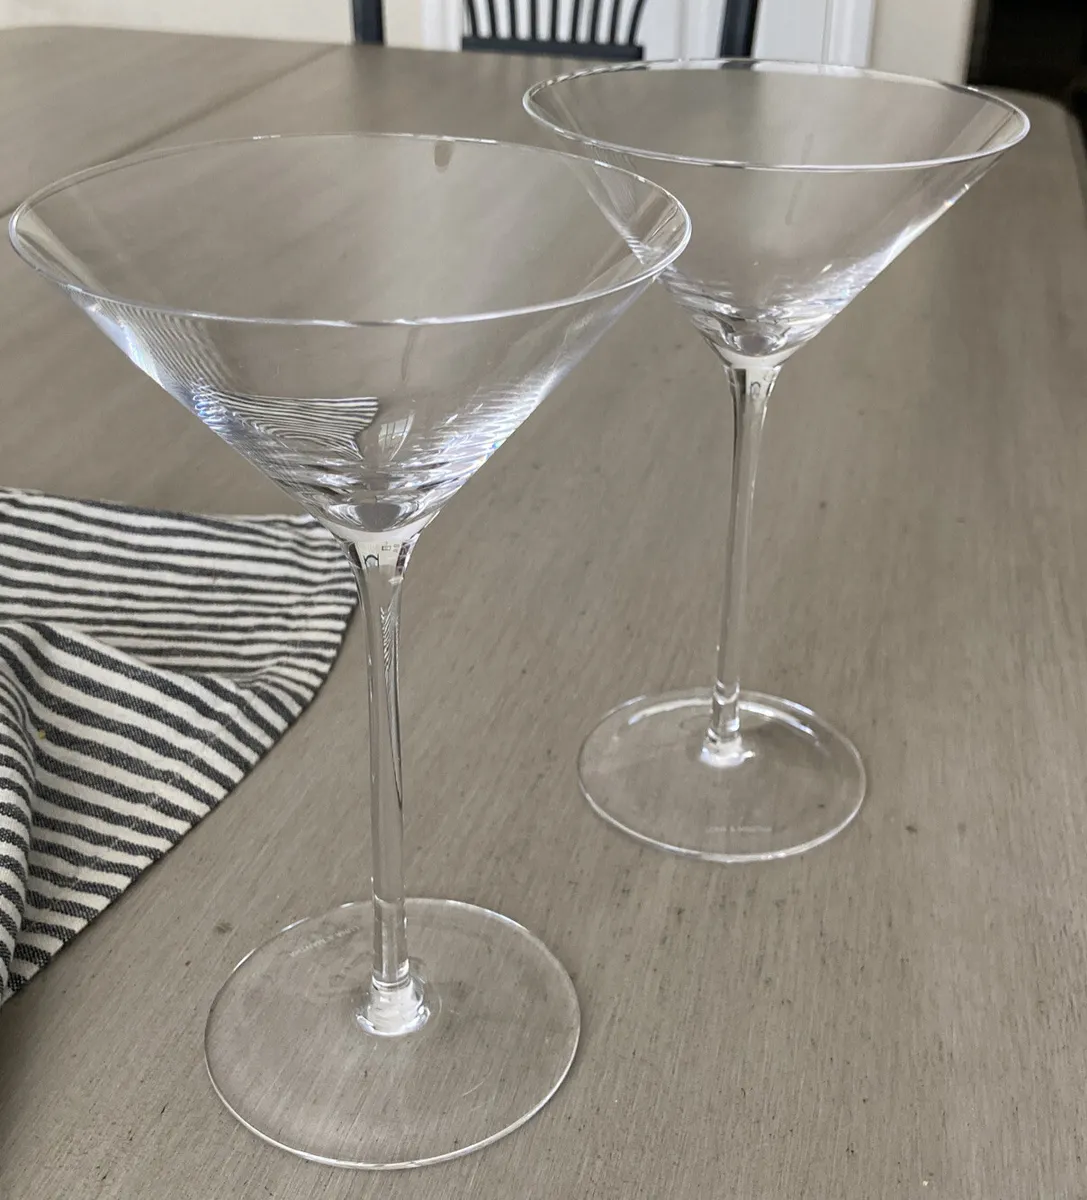 Martini Glass x 2 6oz, Clear | Bar | LSA Drinkware